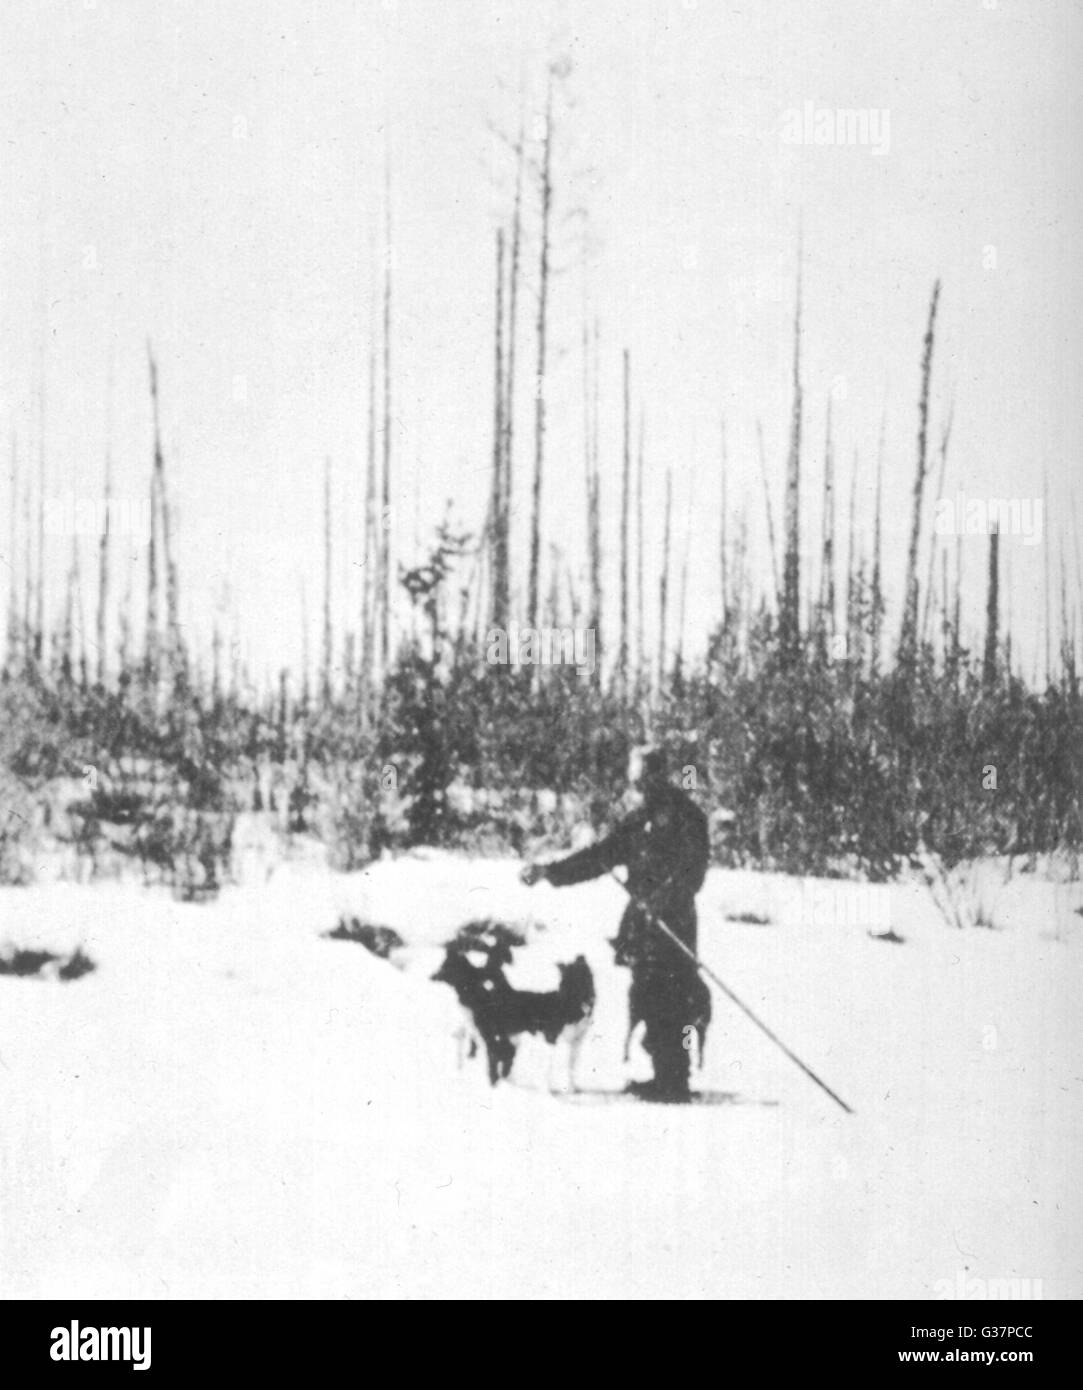 Kulik steht in der Nähe einen Abschnitt des aufrechten verkohlte Bäume, Southern Sumpf, Tunguska.       Datum: 1908 Stockfoto